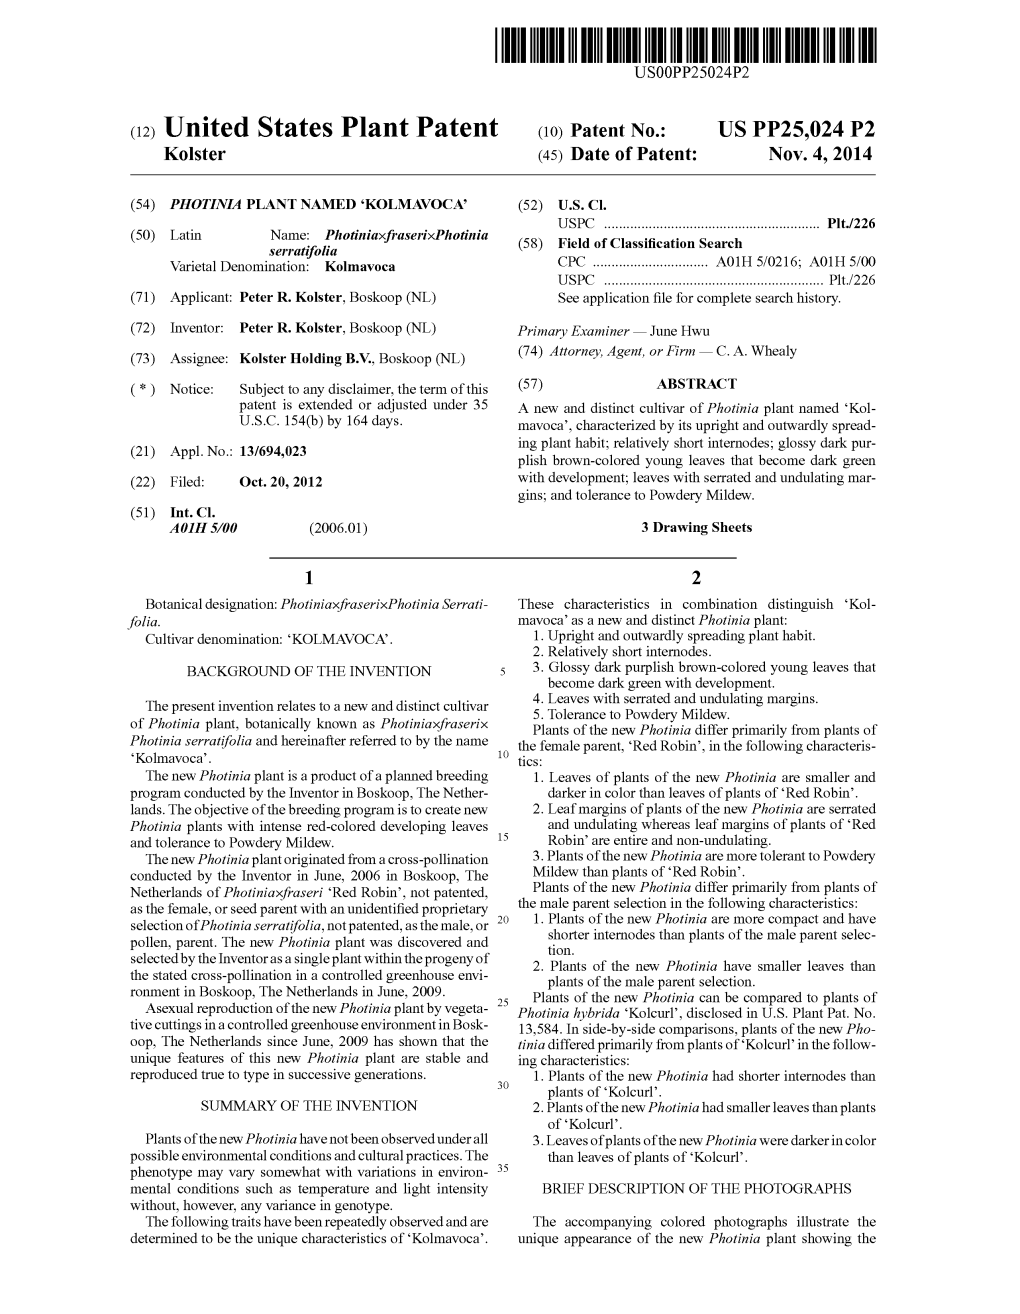 (12) United States Plant Patent (10) Patent No.: US PP25,024 P2 Kolster (45) Date of Patent: Nov